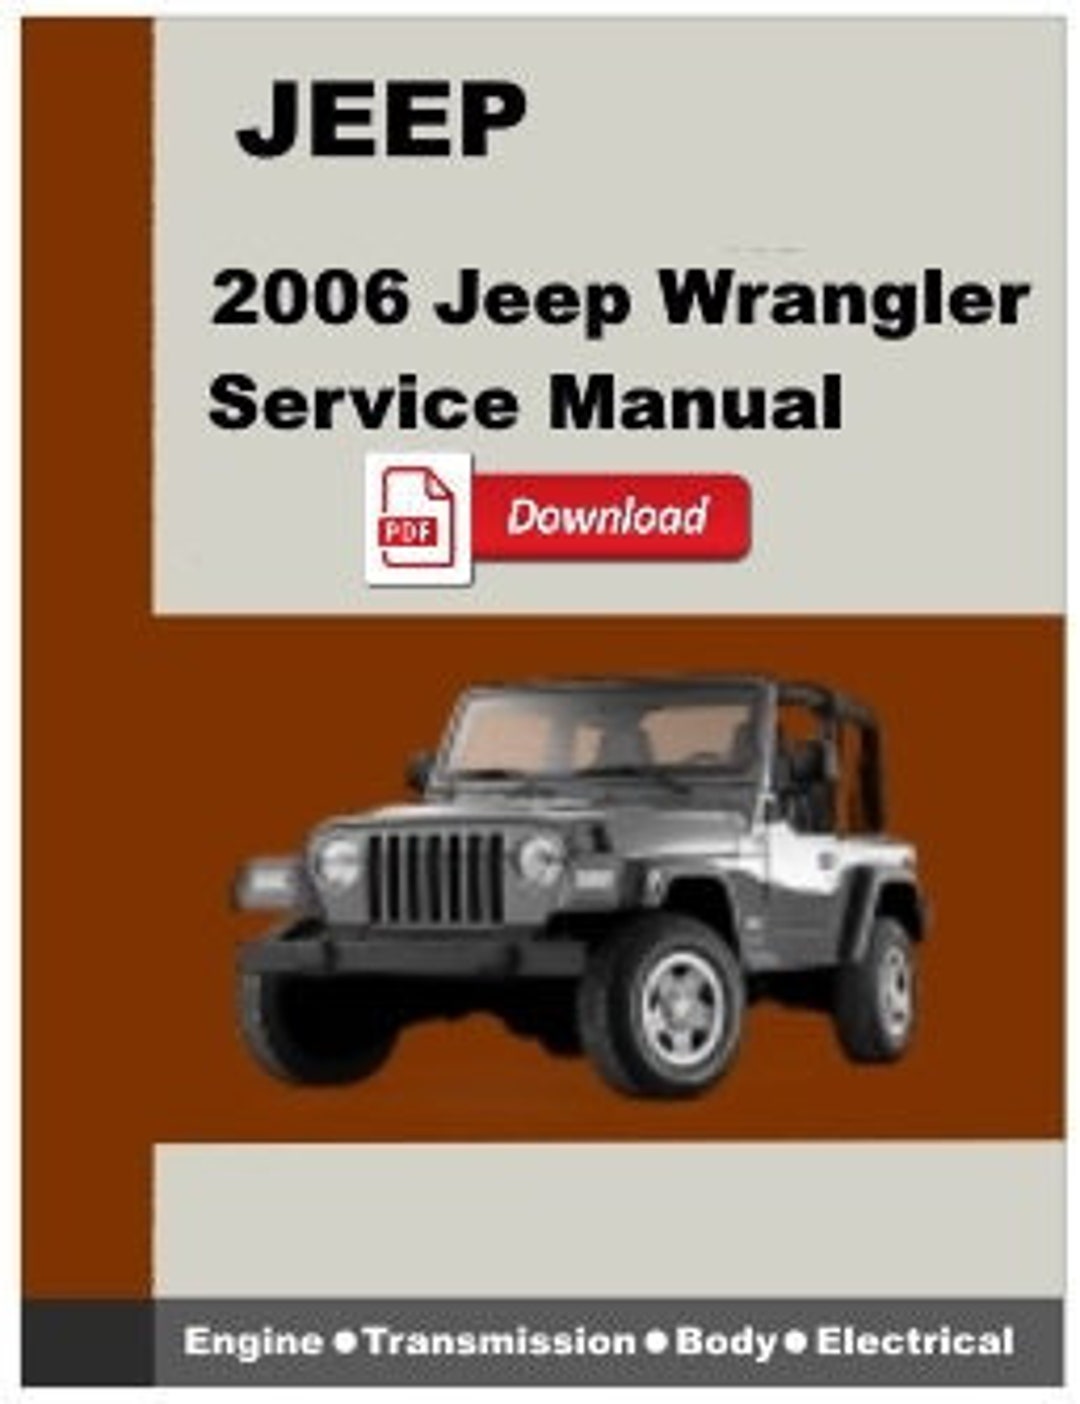 2006 Jeep Wrangler Service Manual-pdf Download - Etsy